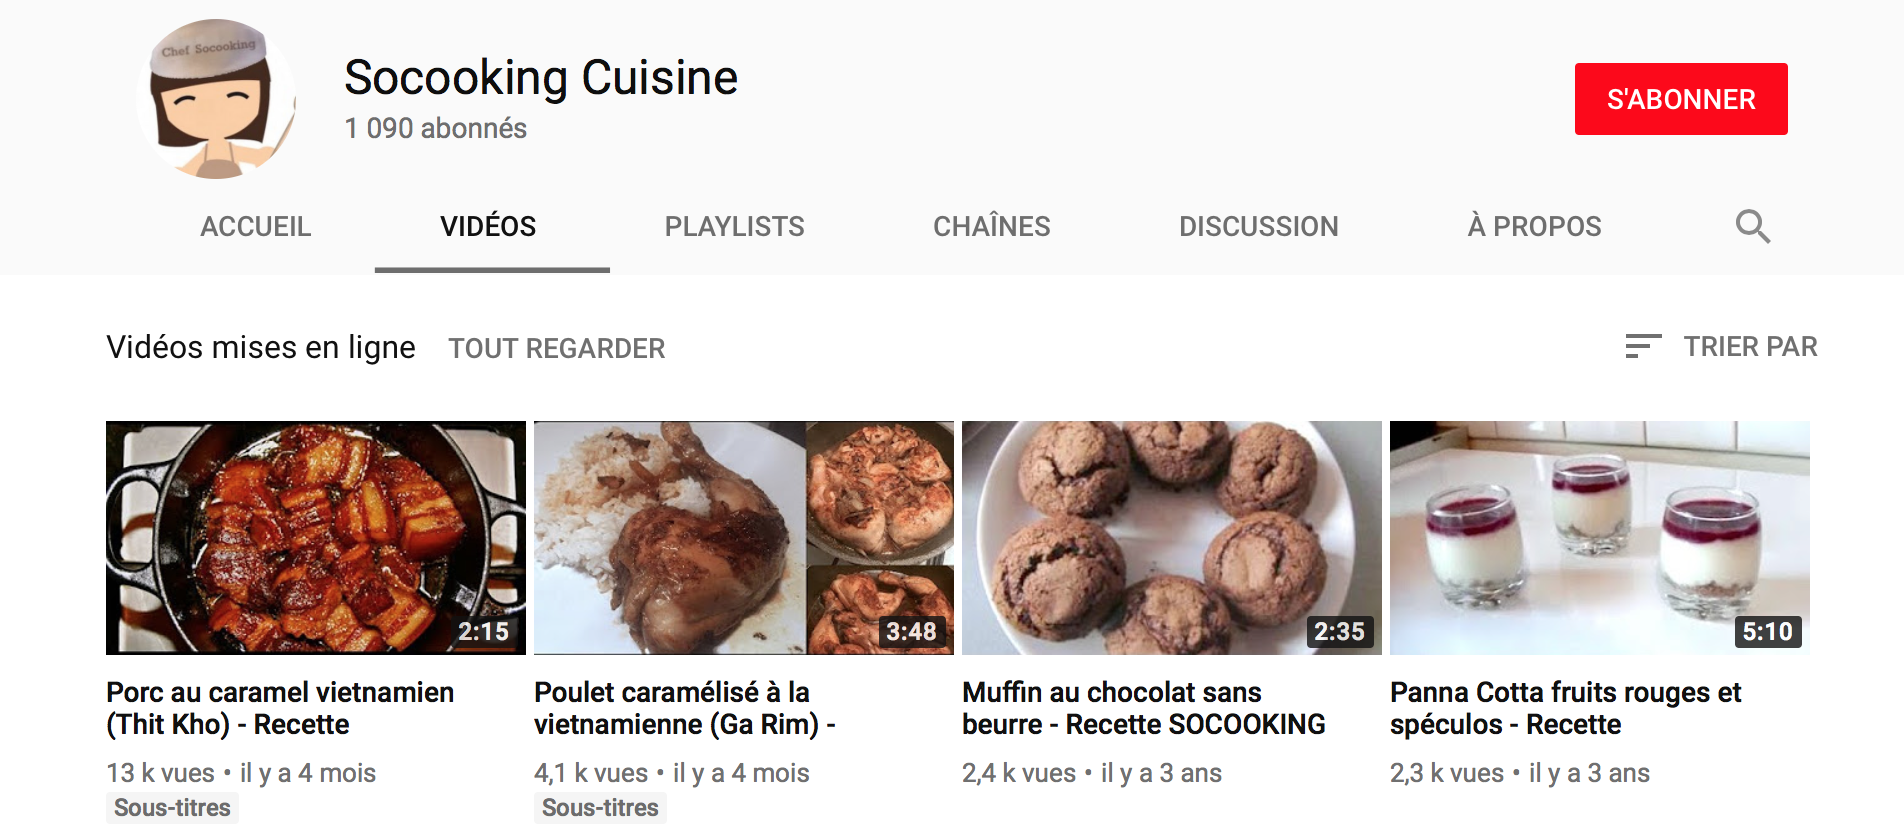 Chaine youtube socooking cuisine